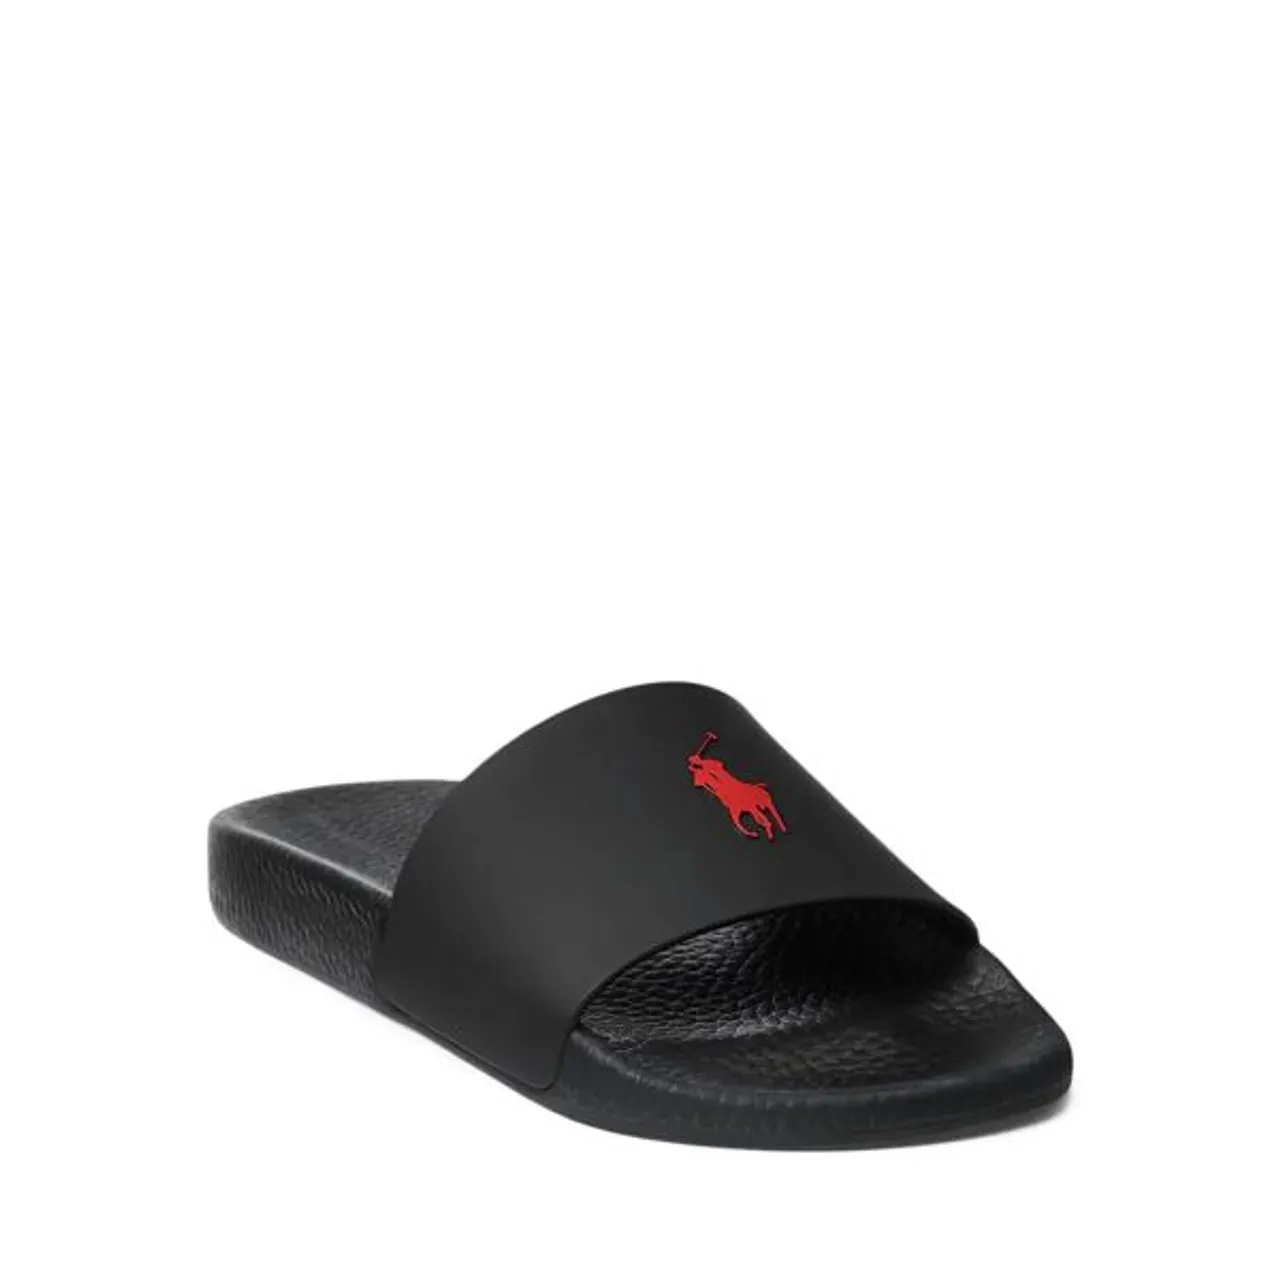 Polo Ralph Lauren Slider Sandals, Black/Red - Black Red - Male